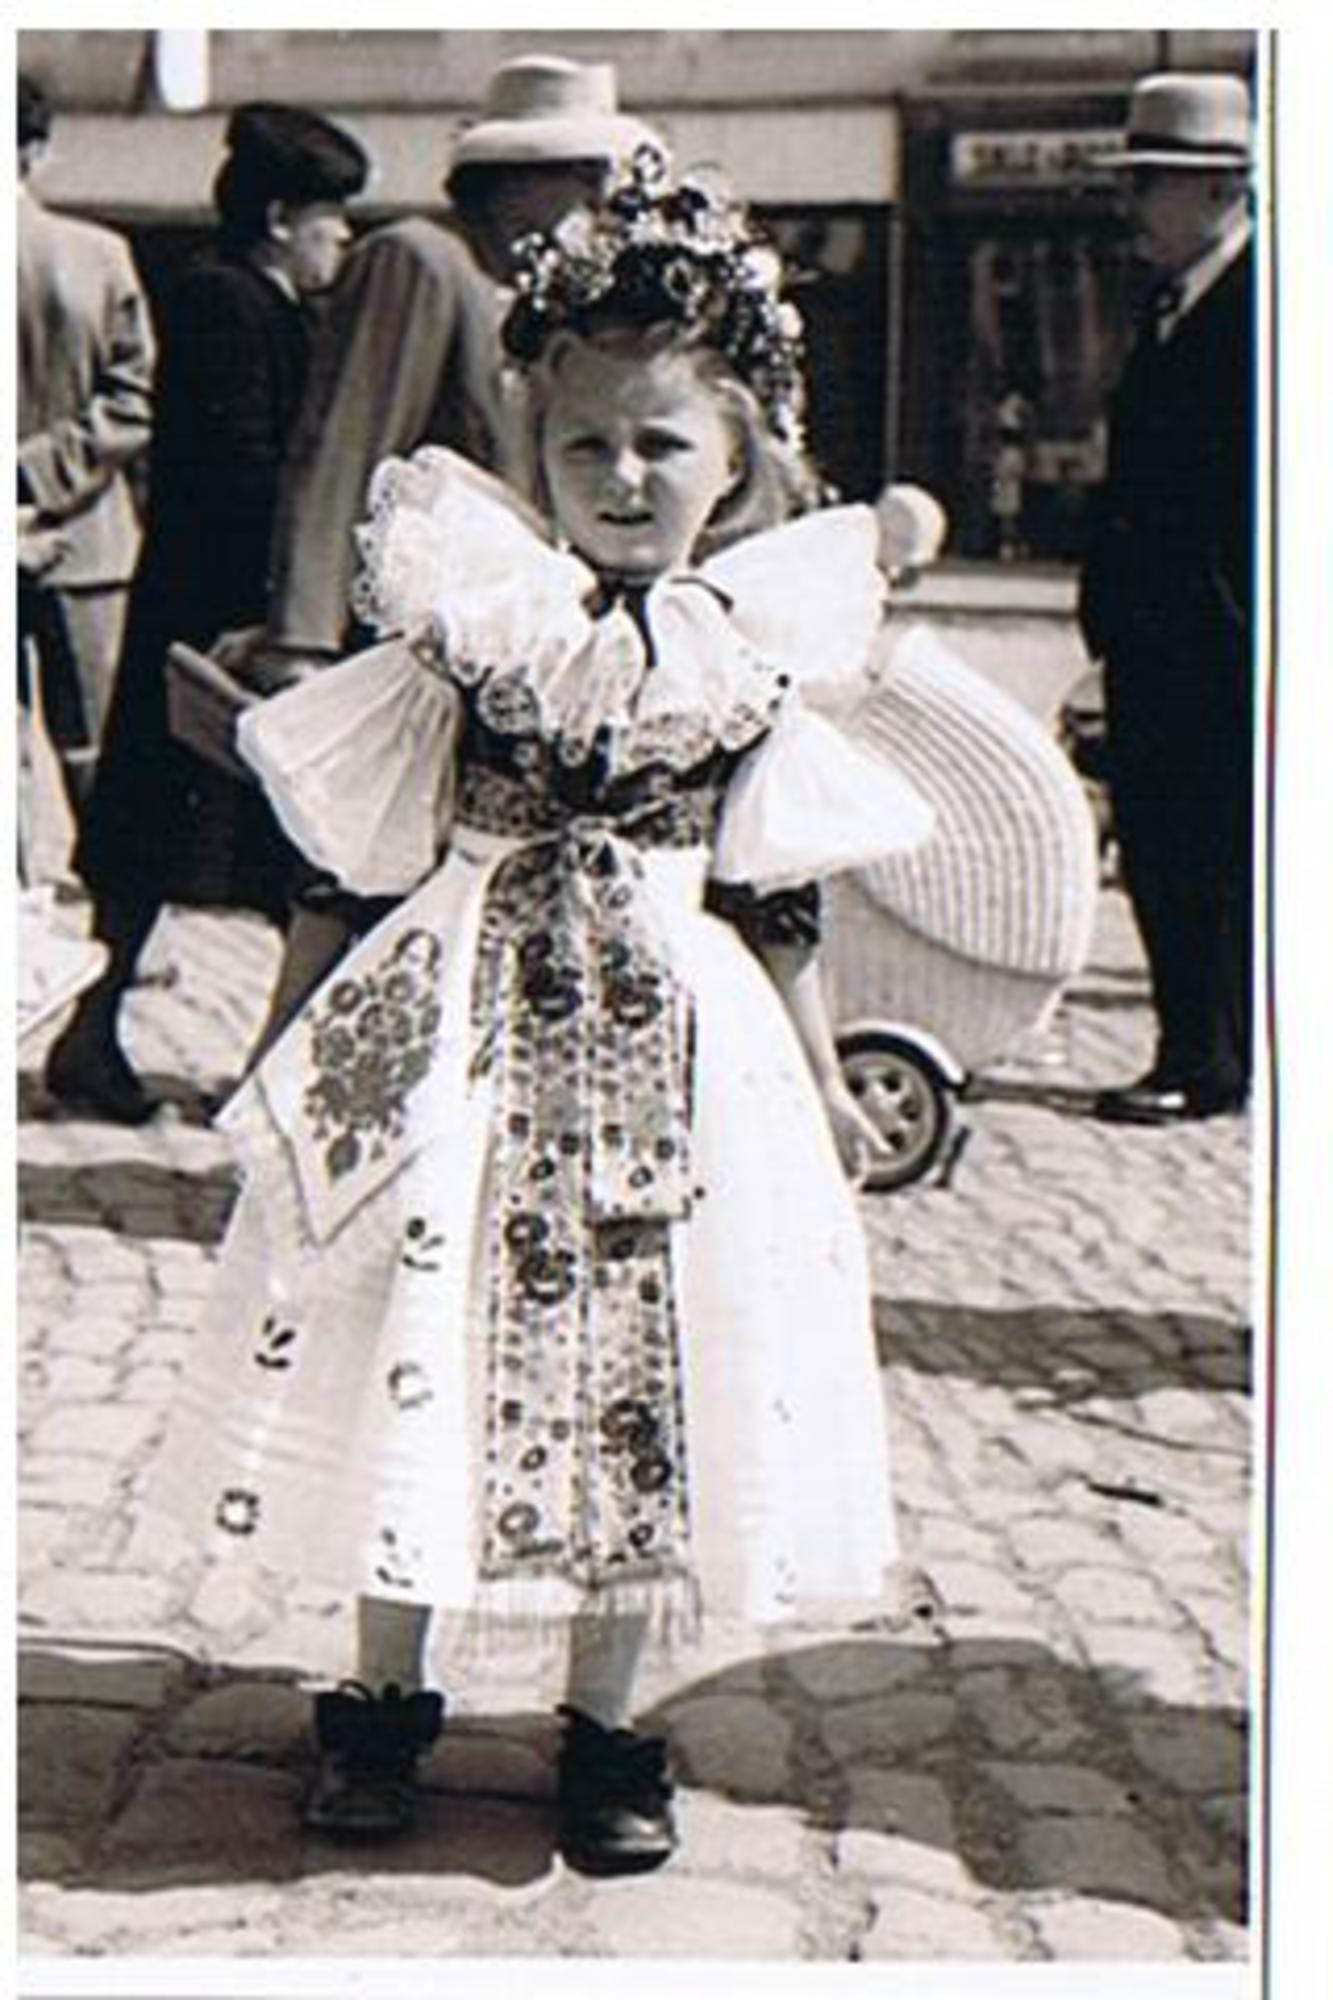 Věra Pytlíčková in her childhood